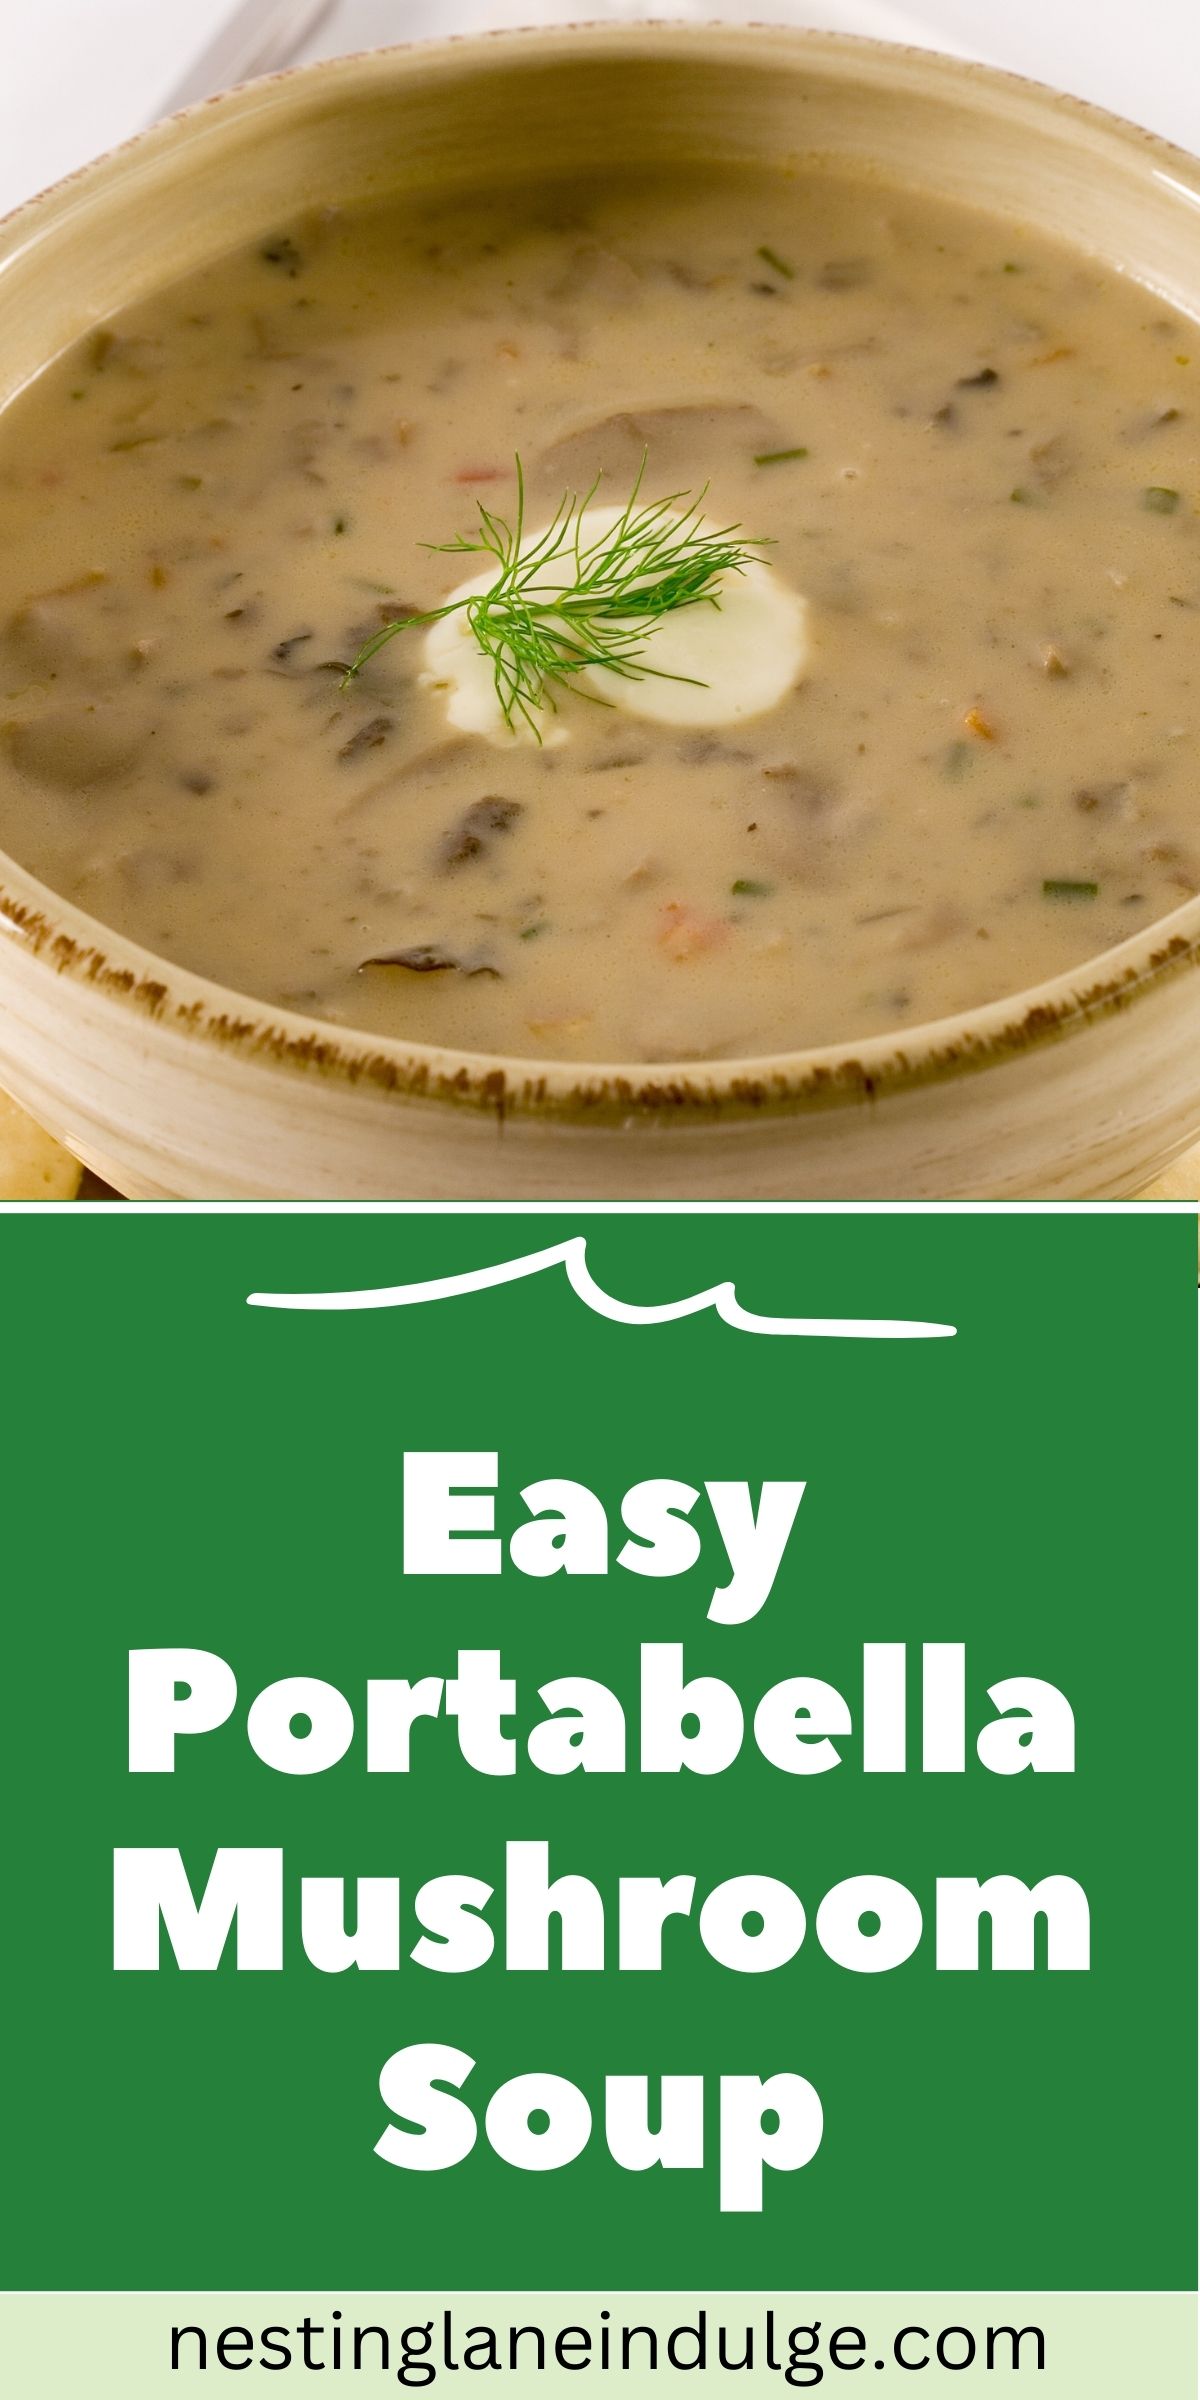 Graphic for Pinterest of Easy Portabella Mushroom Soup Recipe.